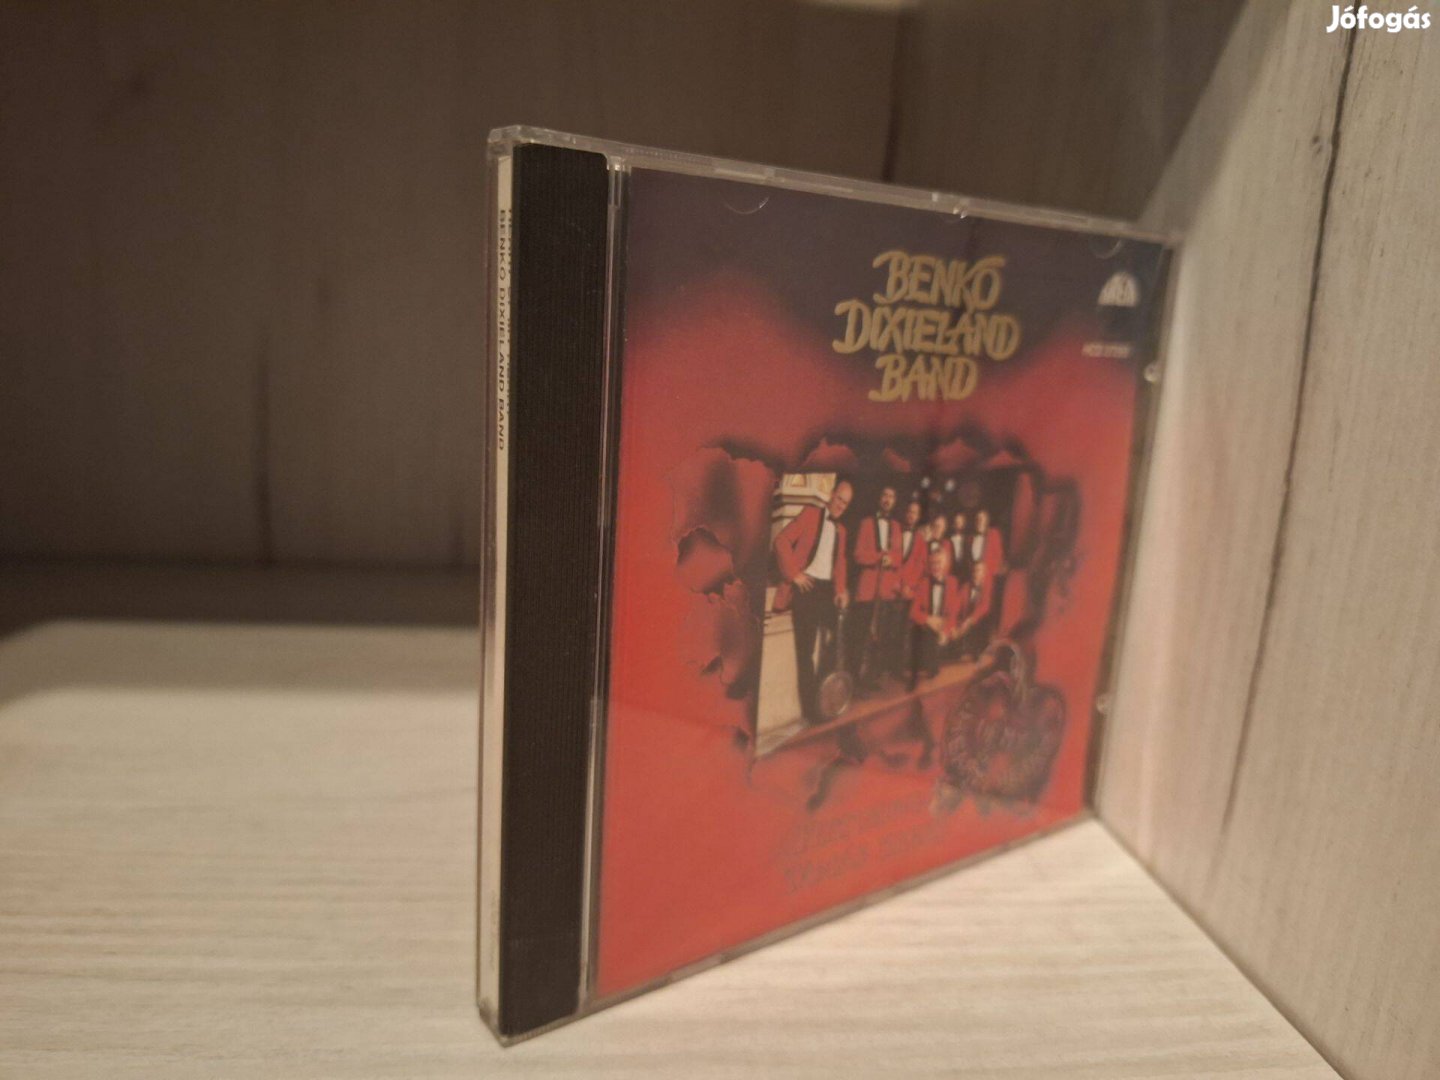 Benkó Dixieland Band - Heart Of My Heart CD